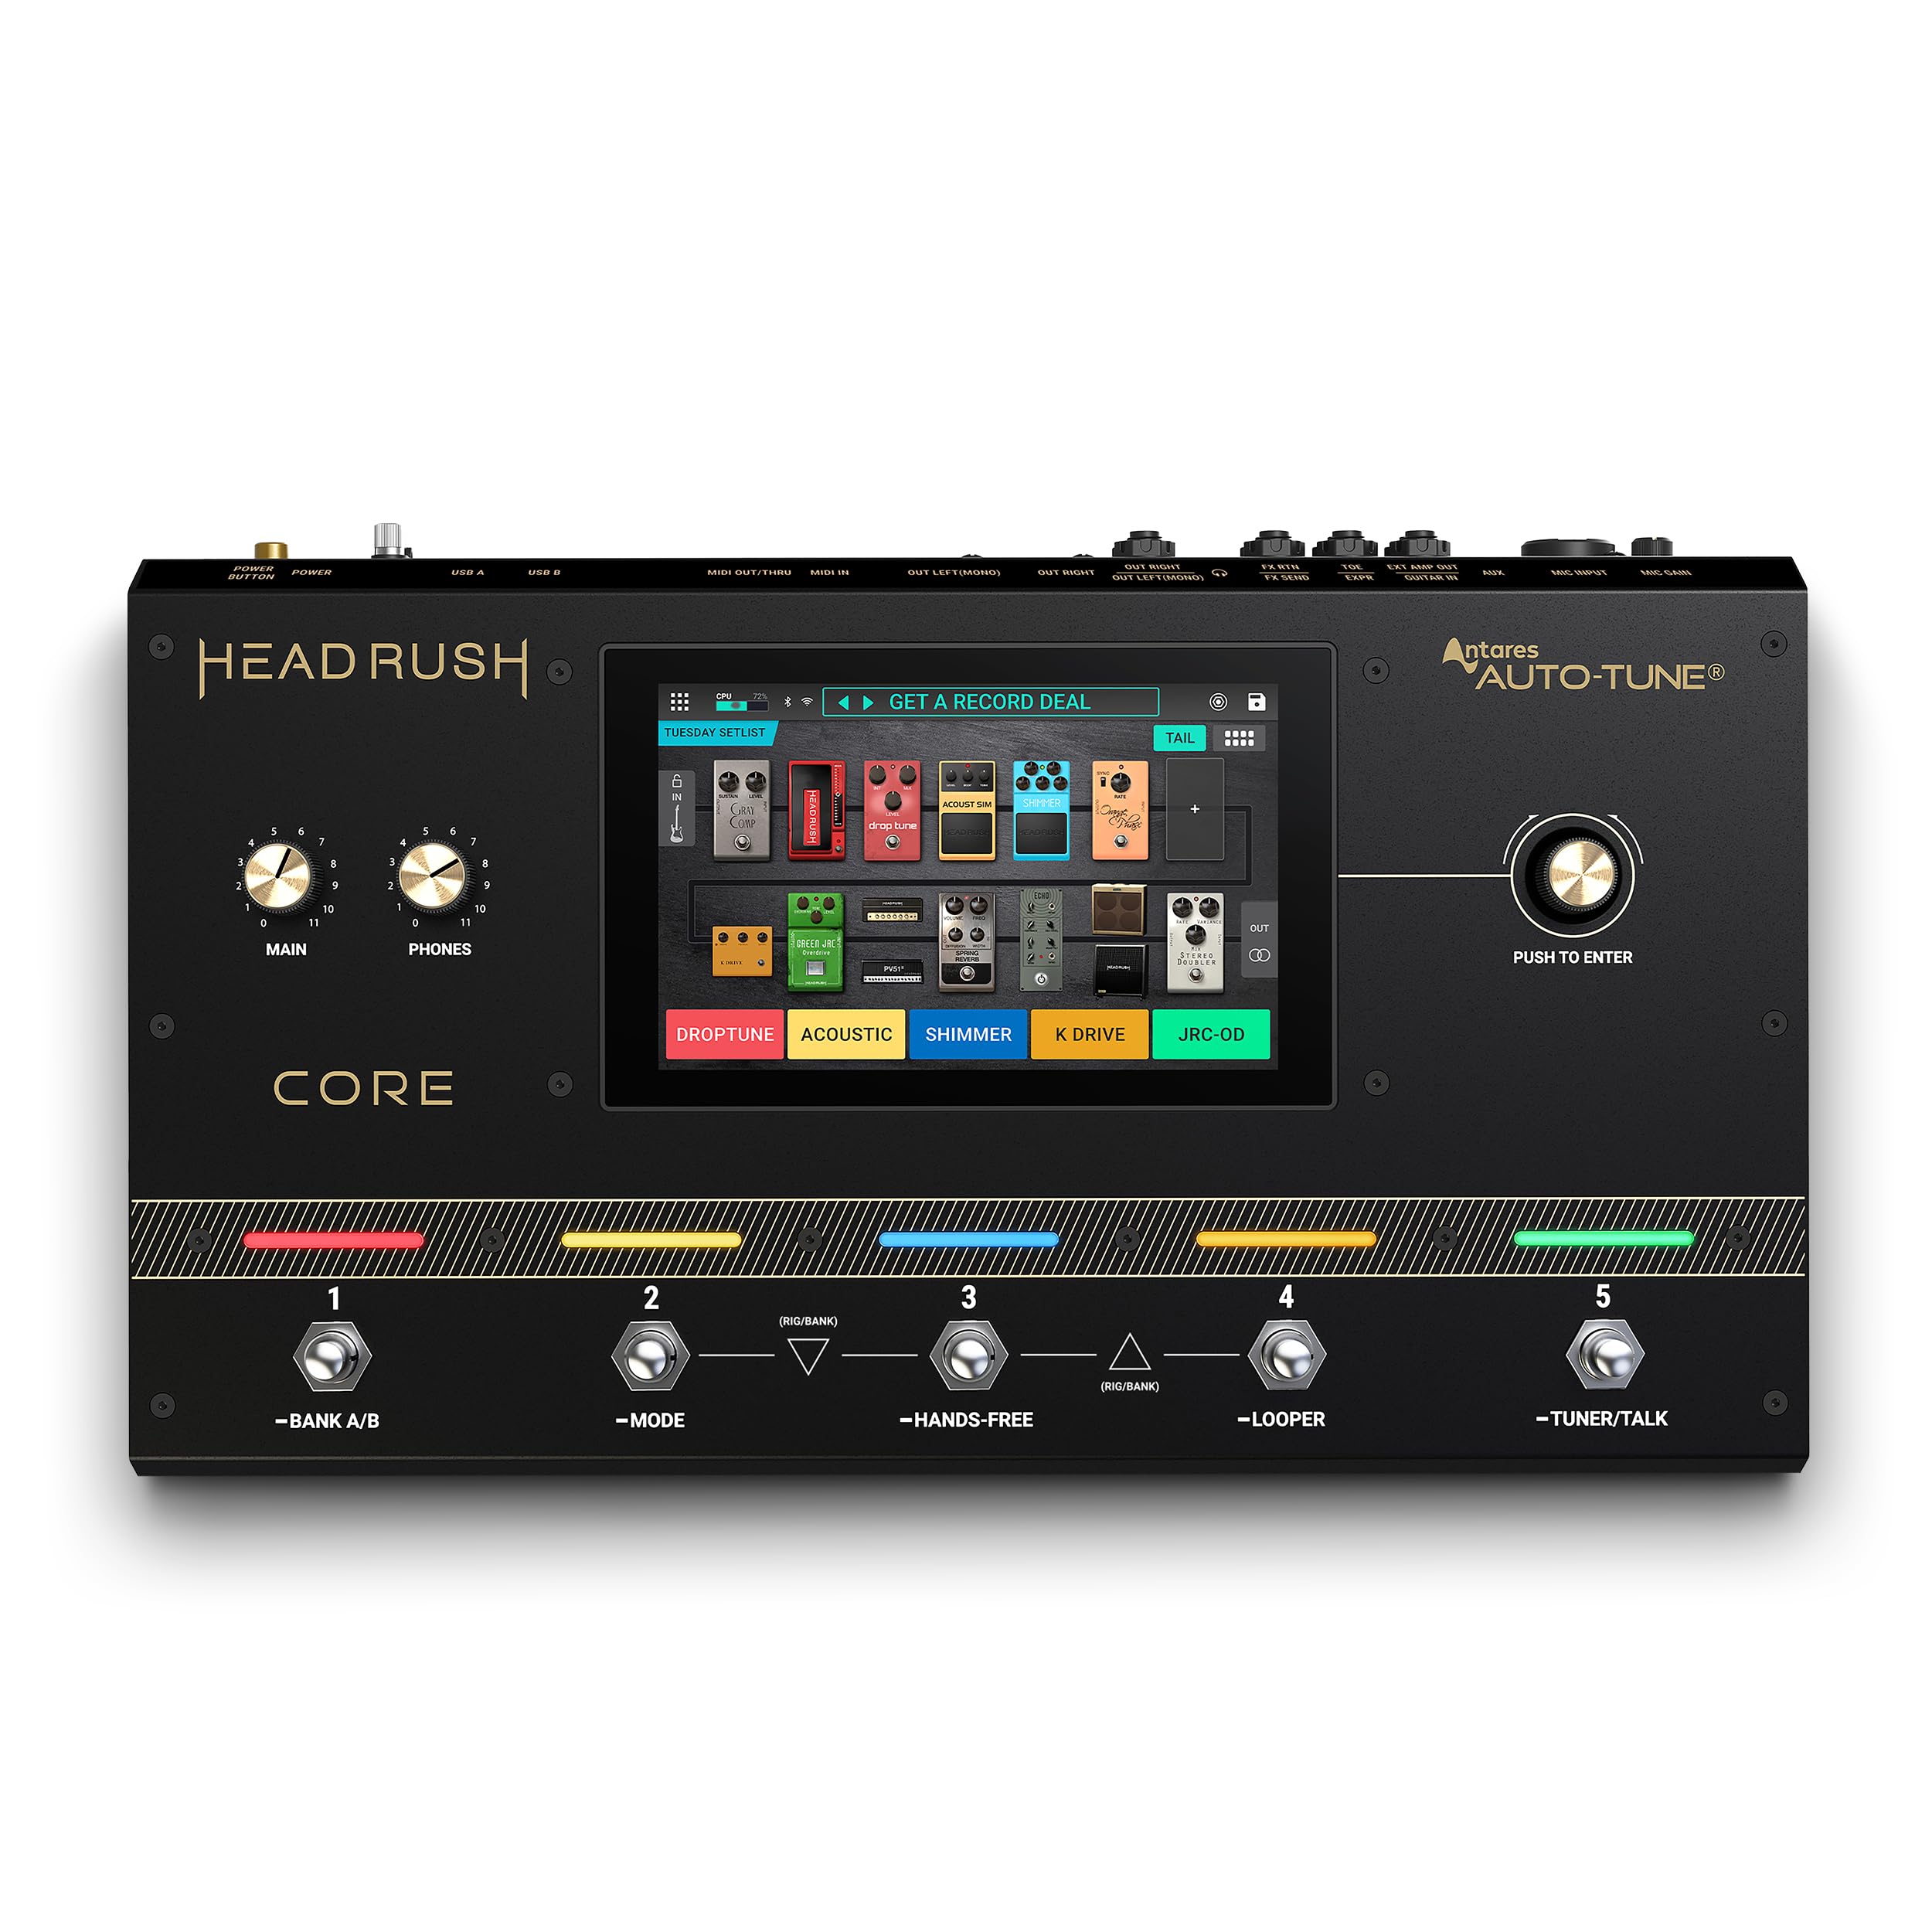 HeadRush Core - Gitarre und Vocal Multi Core Effekt Amp Modelling Prozessor mit Cloning, Looper, Antares Auto-Tune, WLAN, Touchscreen und Bluetooth